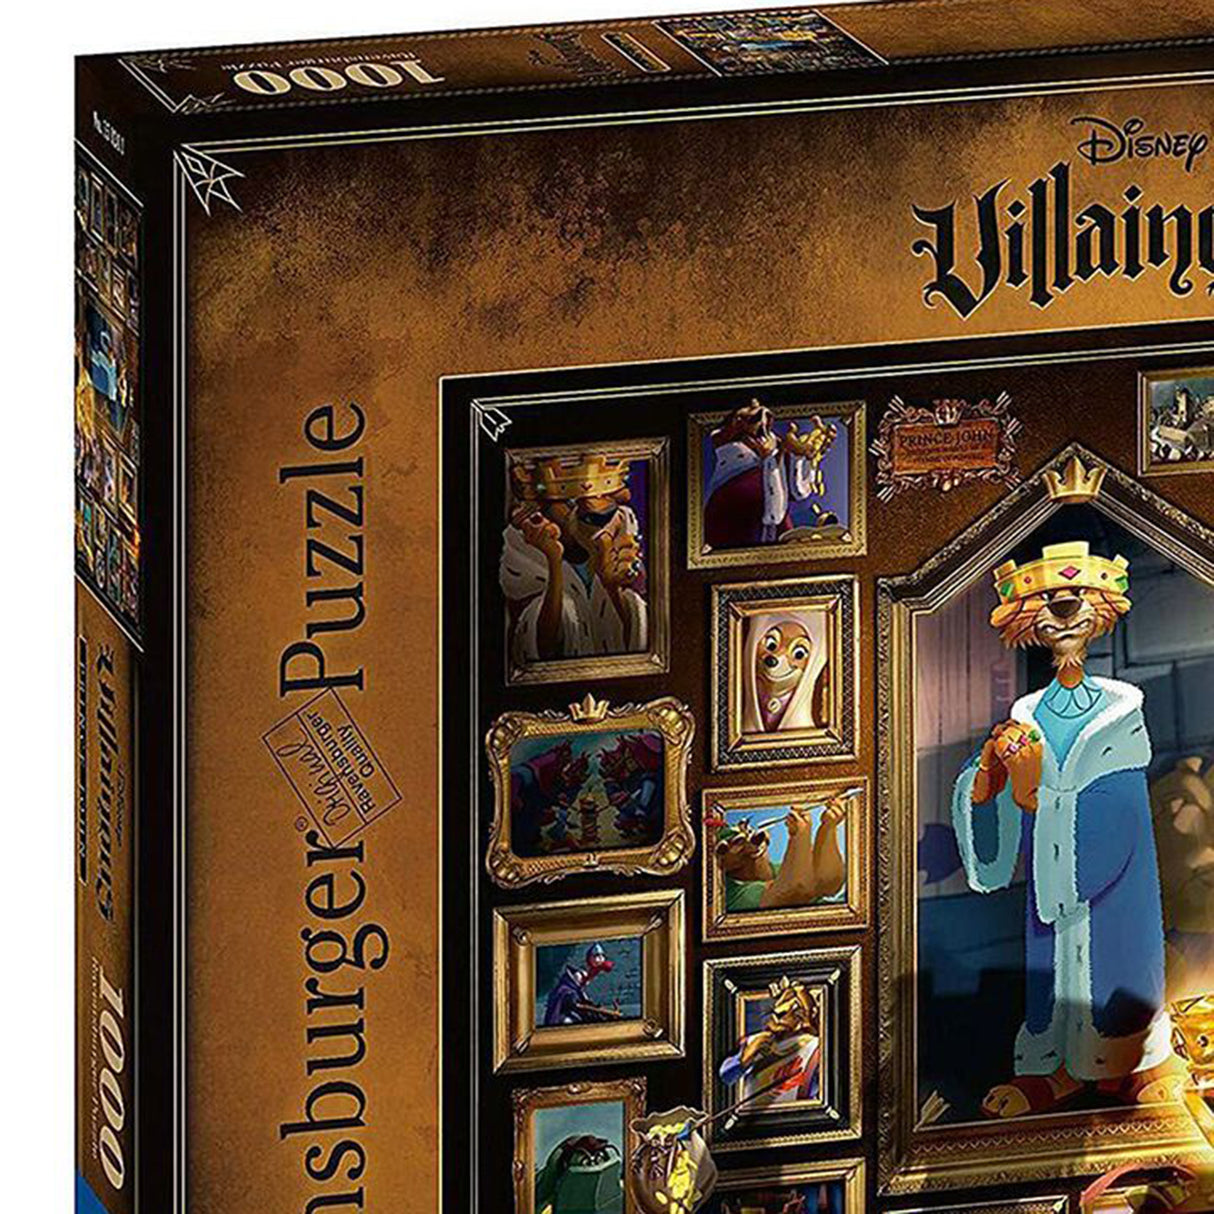 Ravensburger Disney Villainous: Prince John Jigsaw Puzzle (1000 pieces)